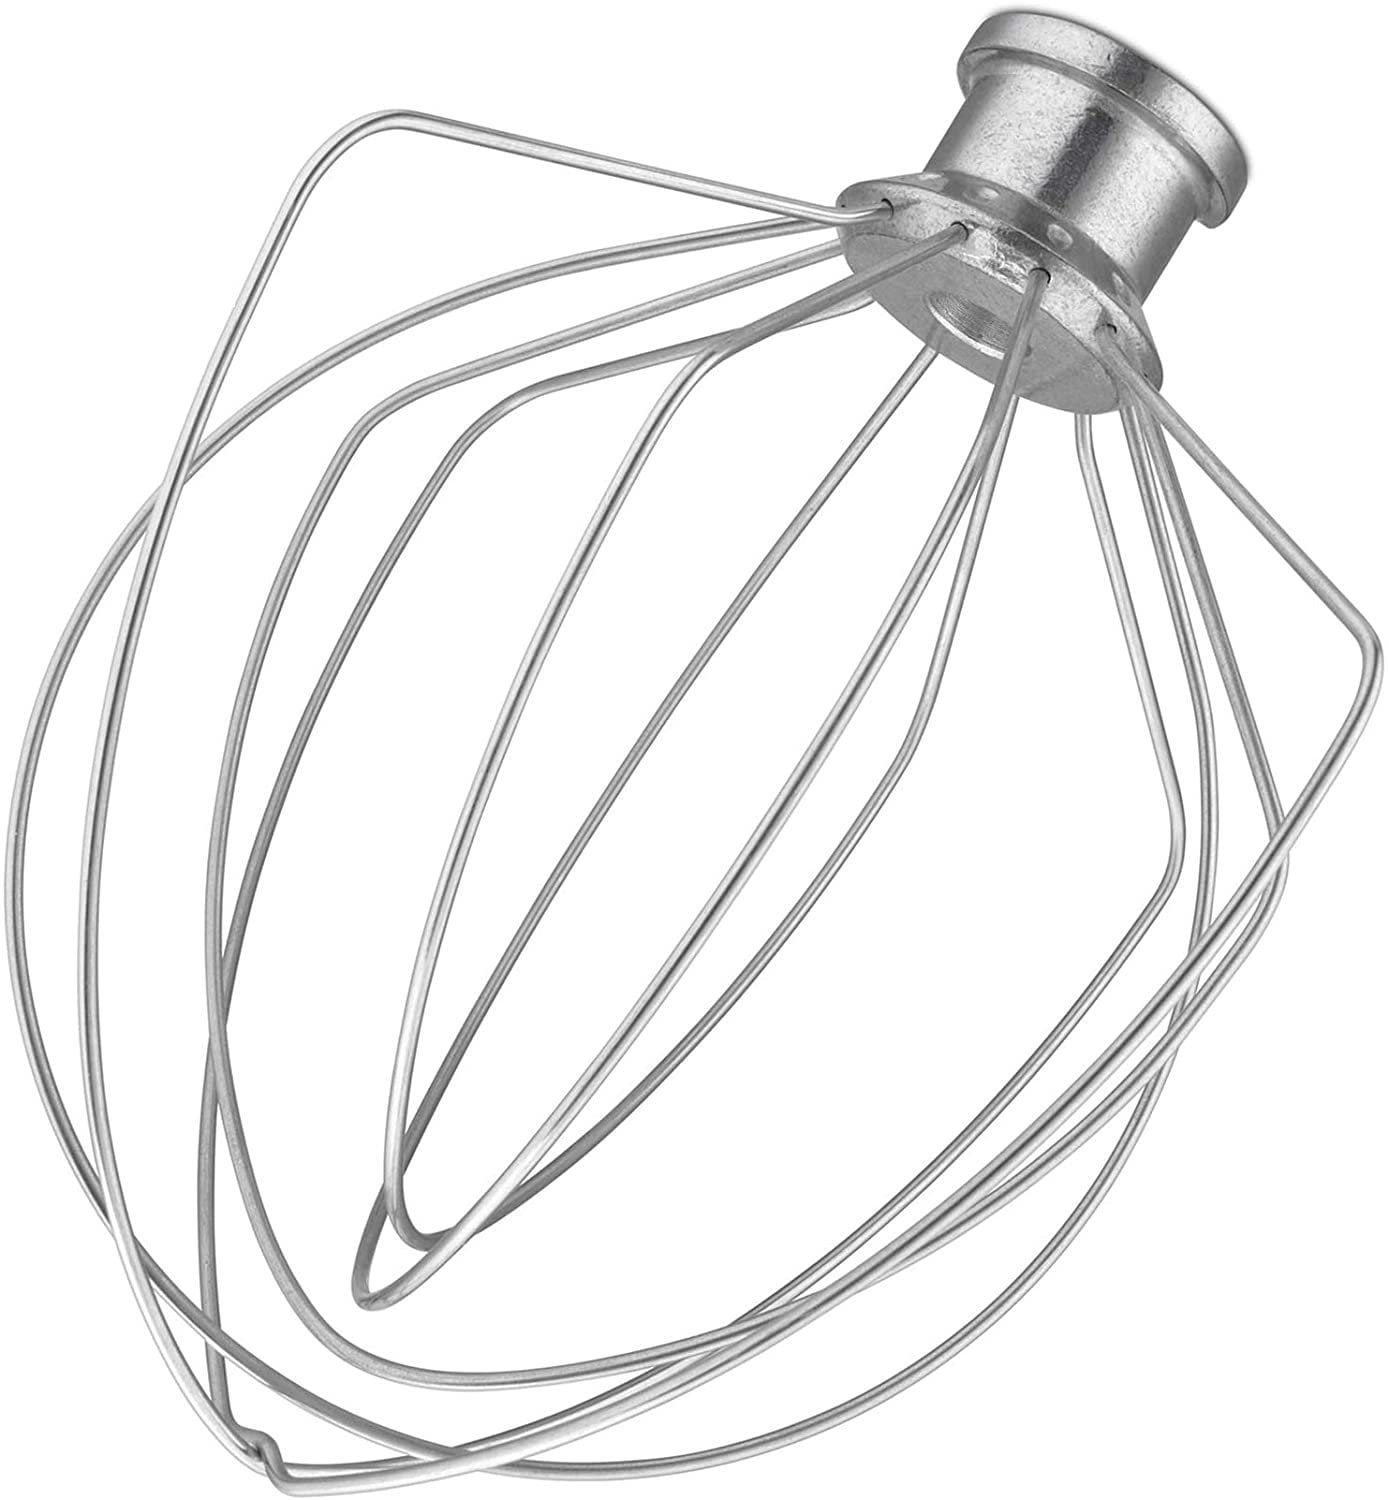 Kn256ww 6-wire Whip Attachment For Kitchenaid 4.5-5 Quart Bowl